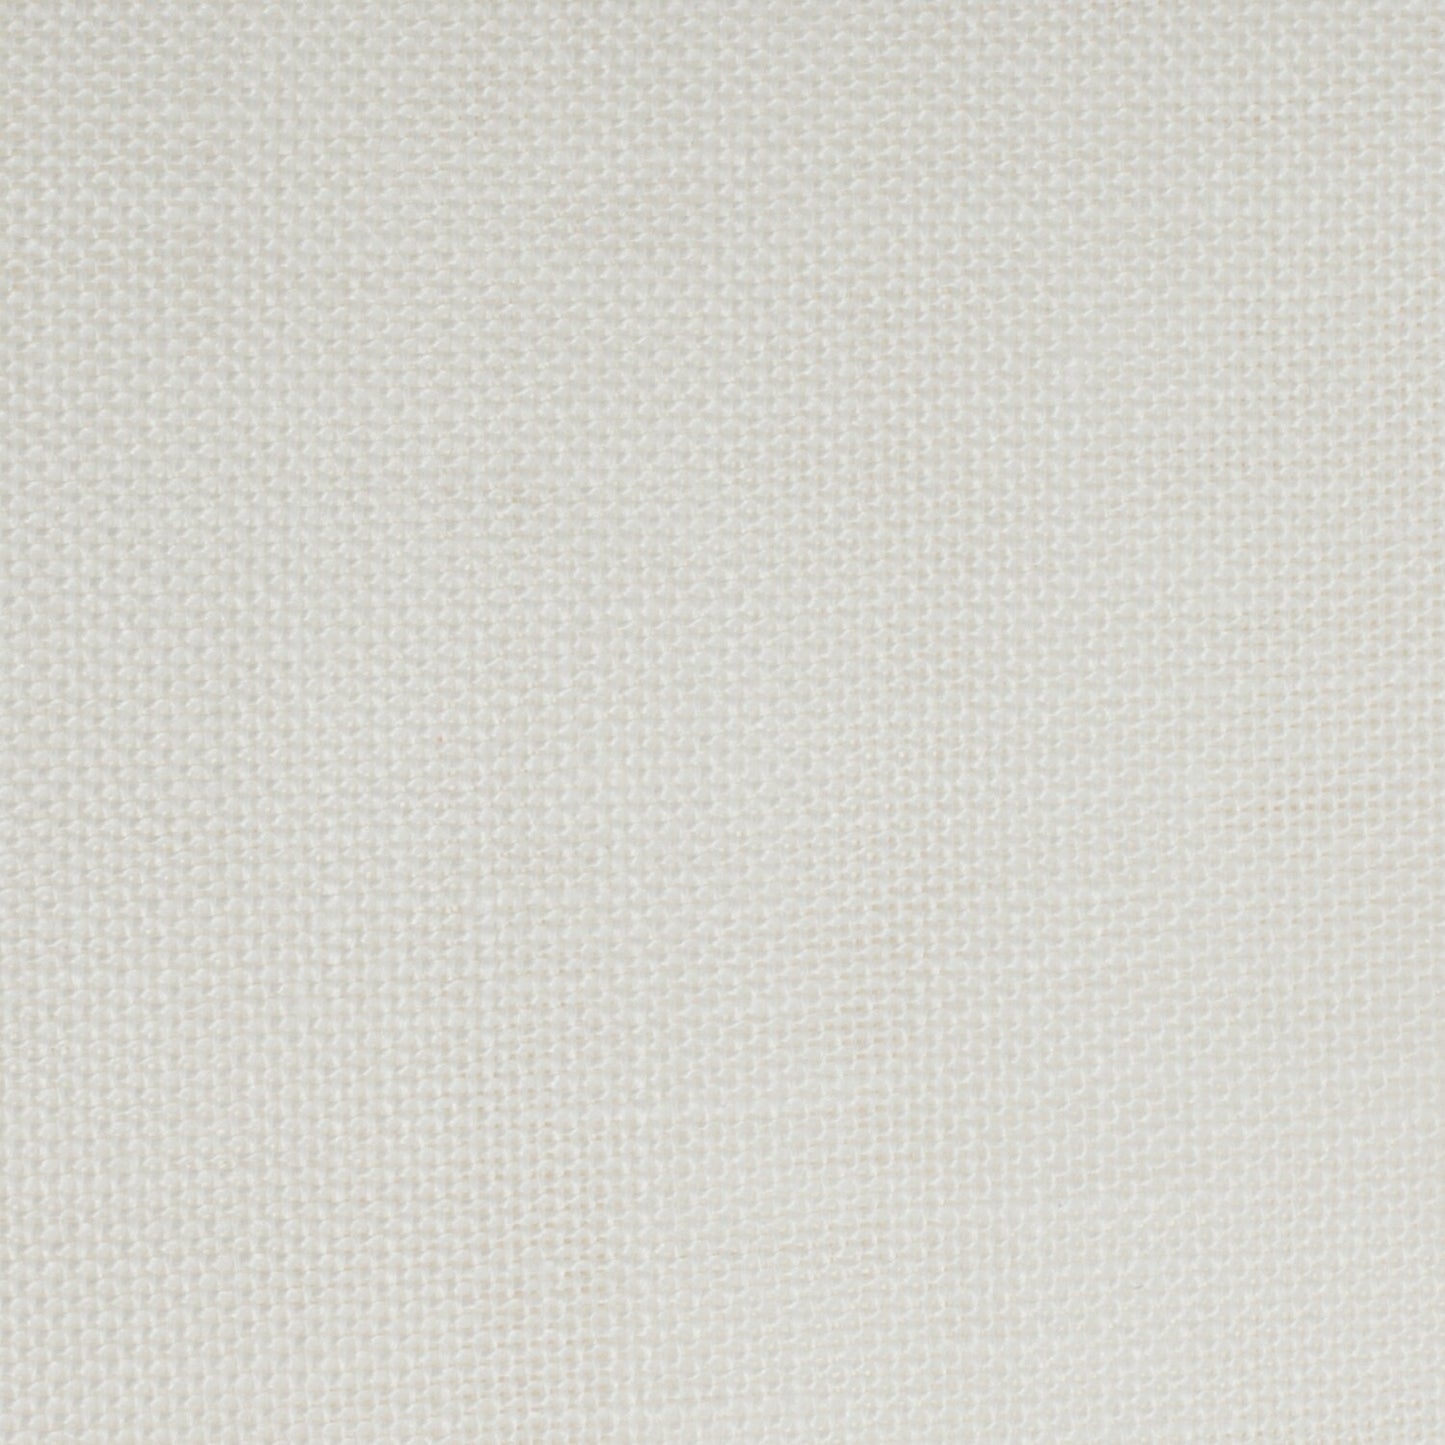 30 ct Linen - Soft White (55" wide) - 0.04195 / sq in